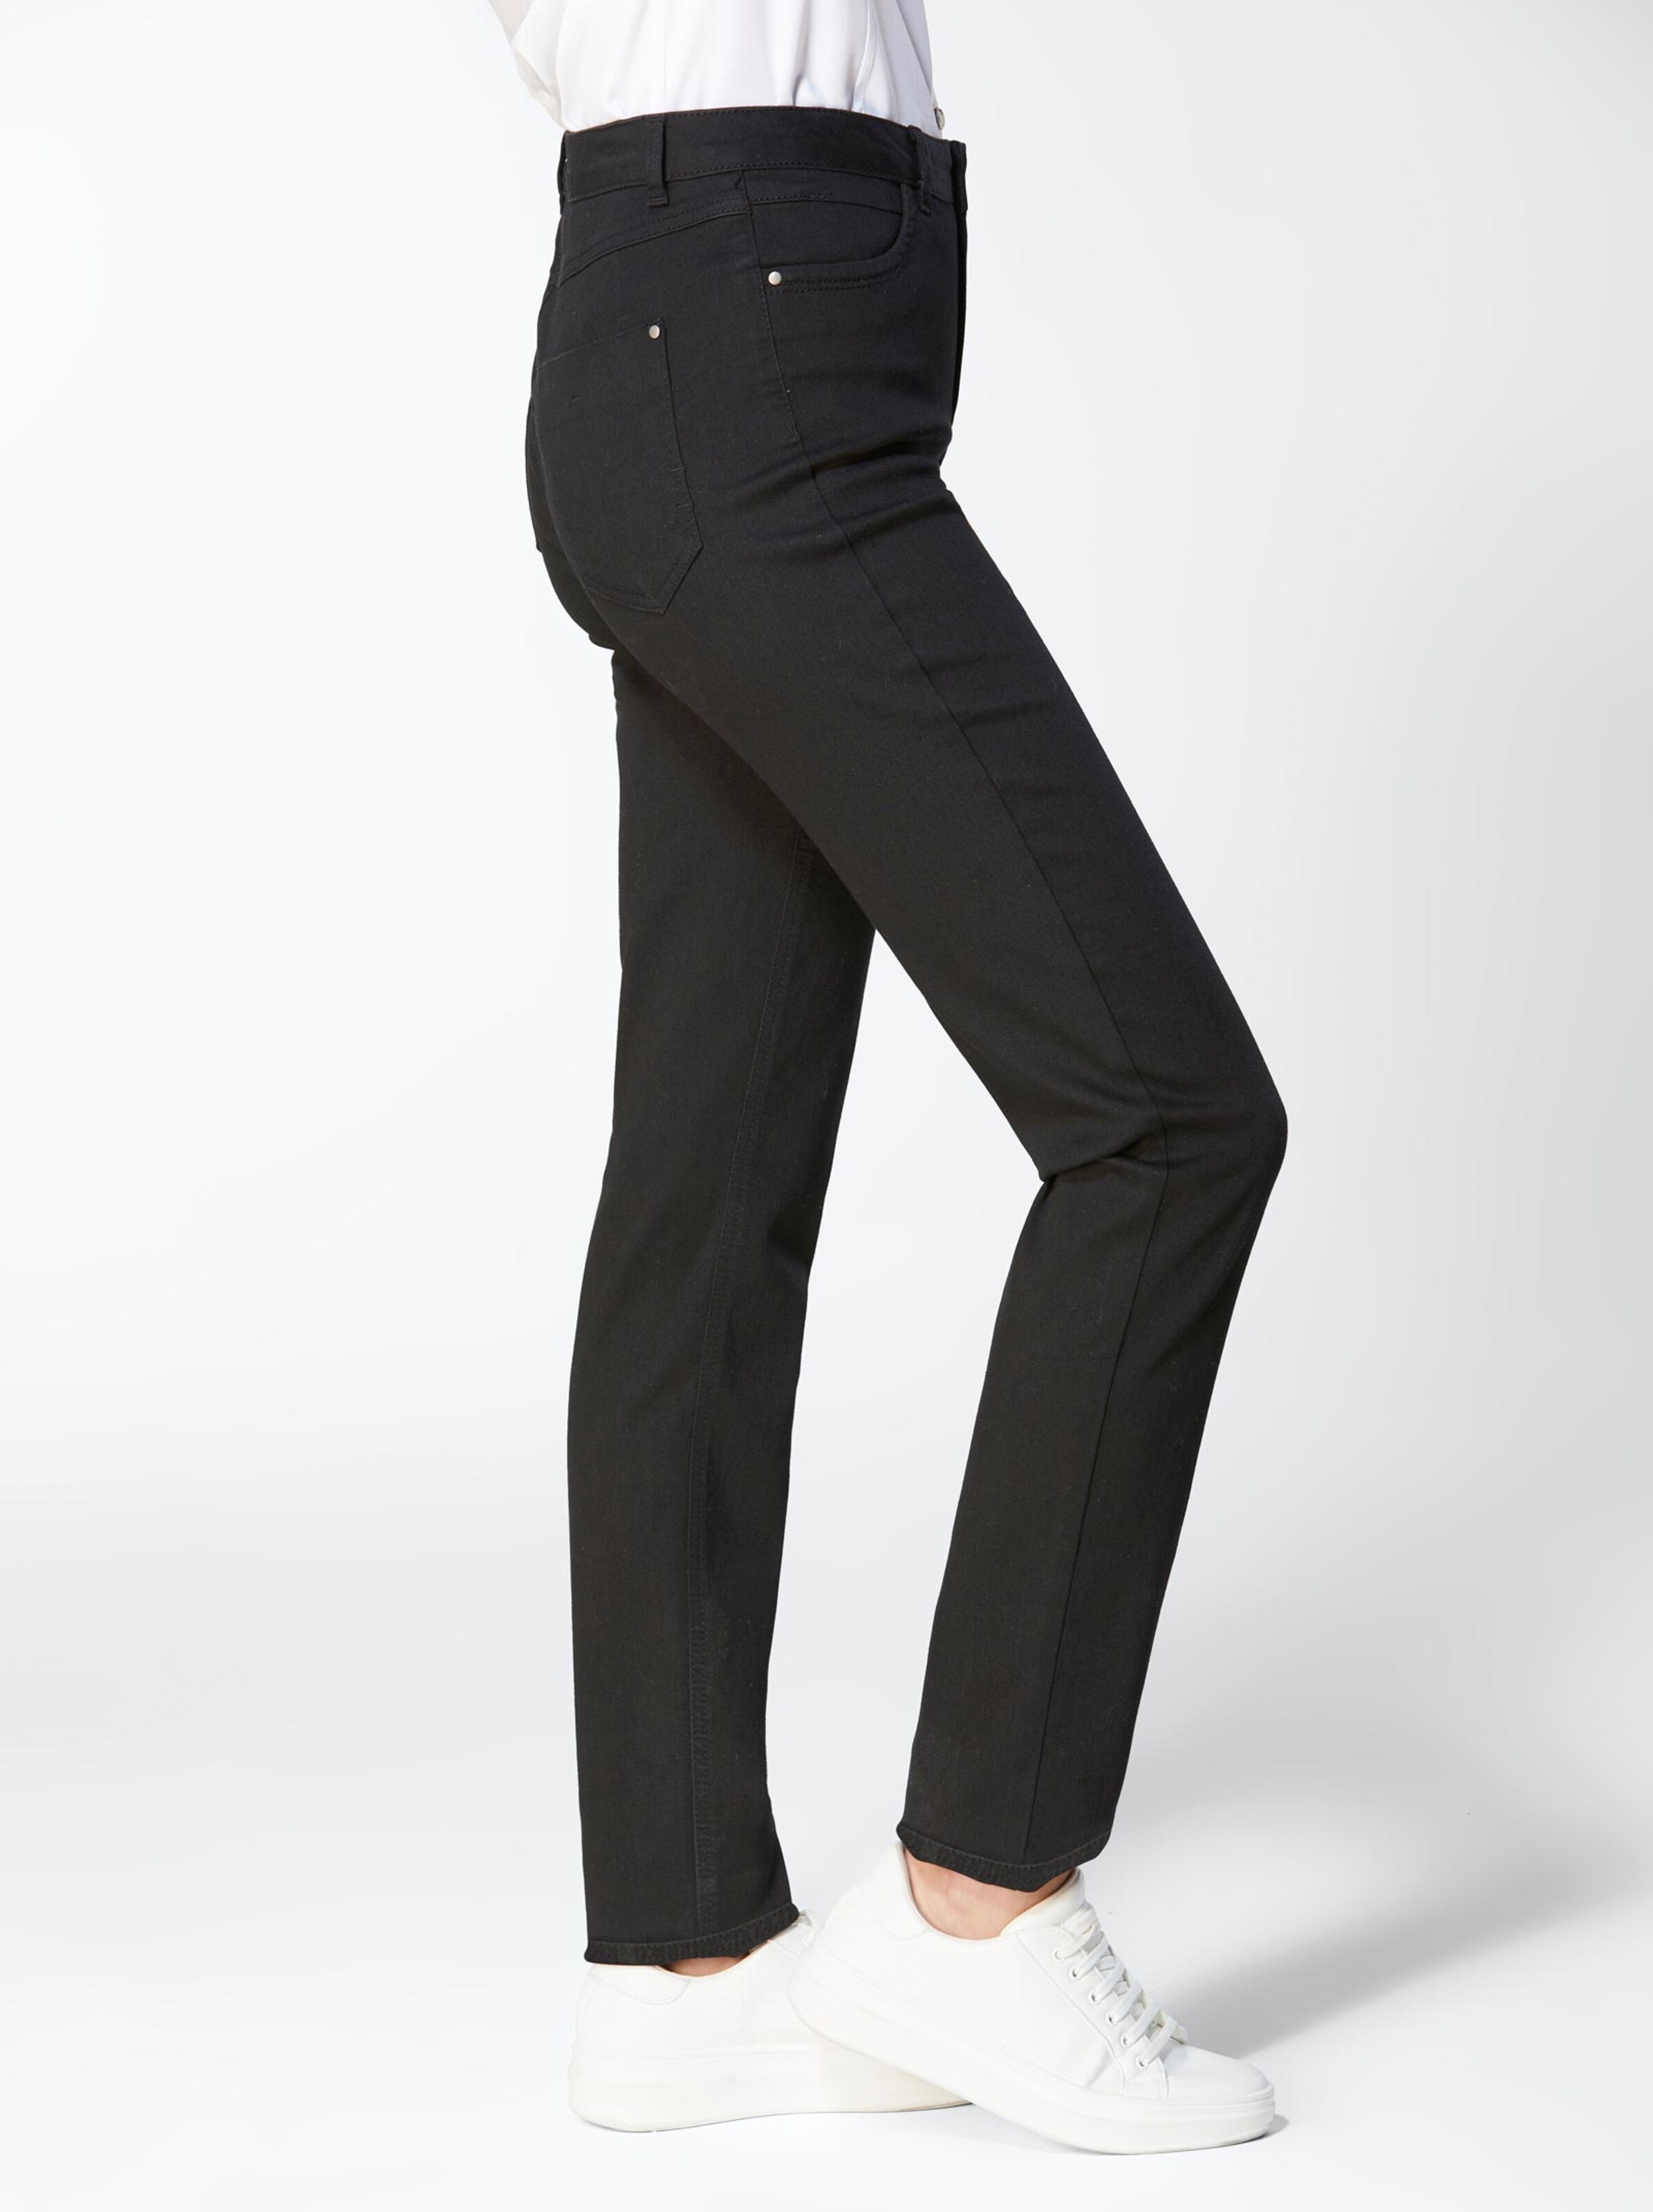 Damenmode Jeans Creation L Premium Edel-Jeans in black-denim 